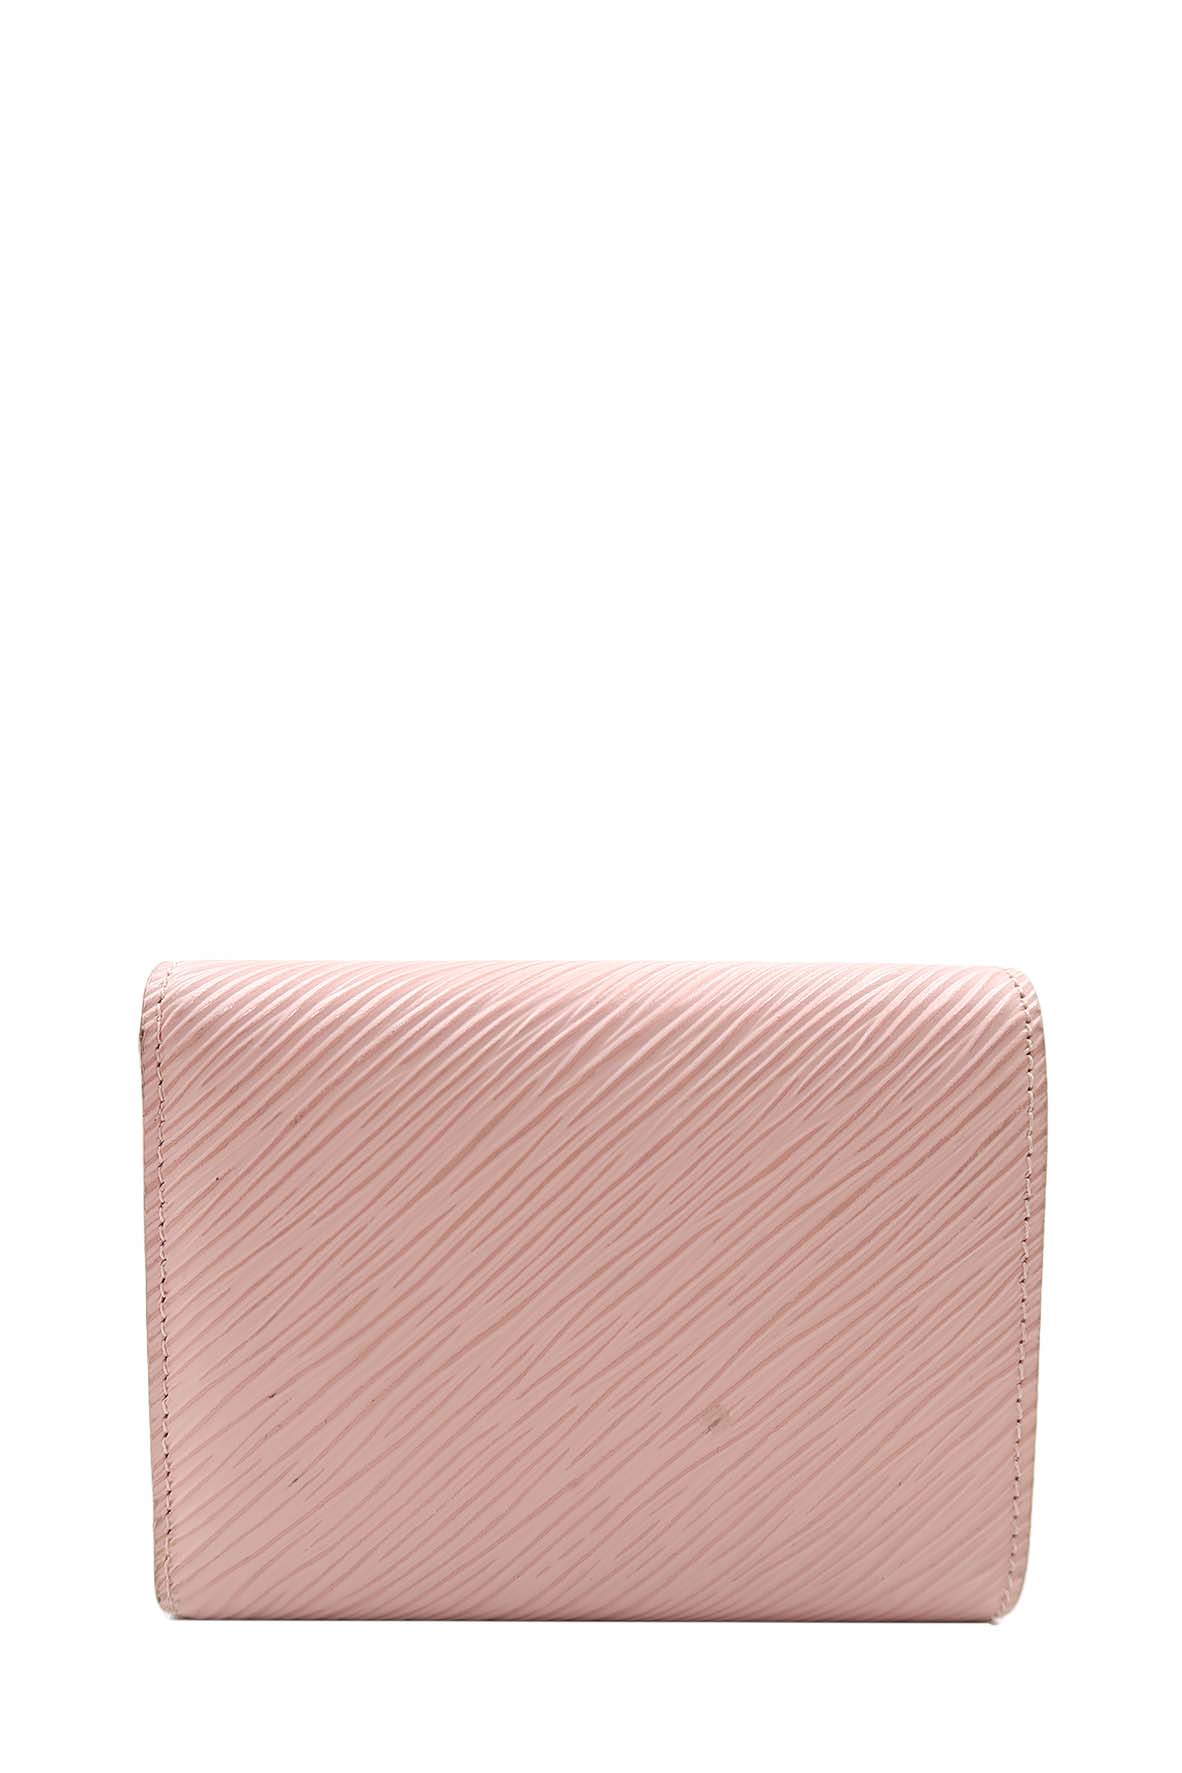 Louis Vuitton Twist Compact Wallet 9230